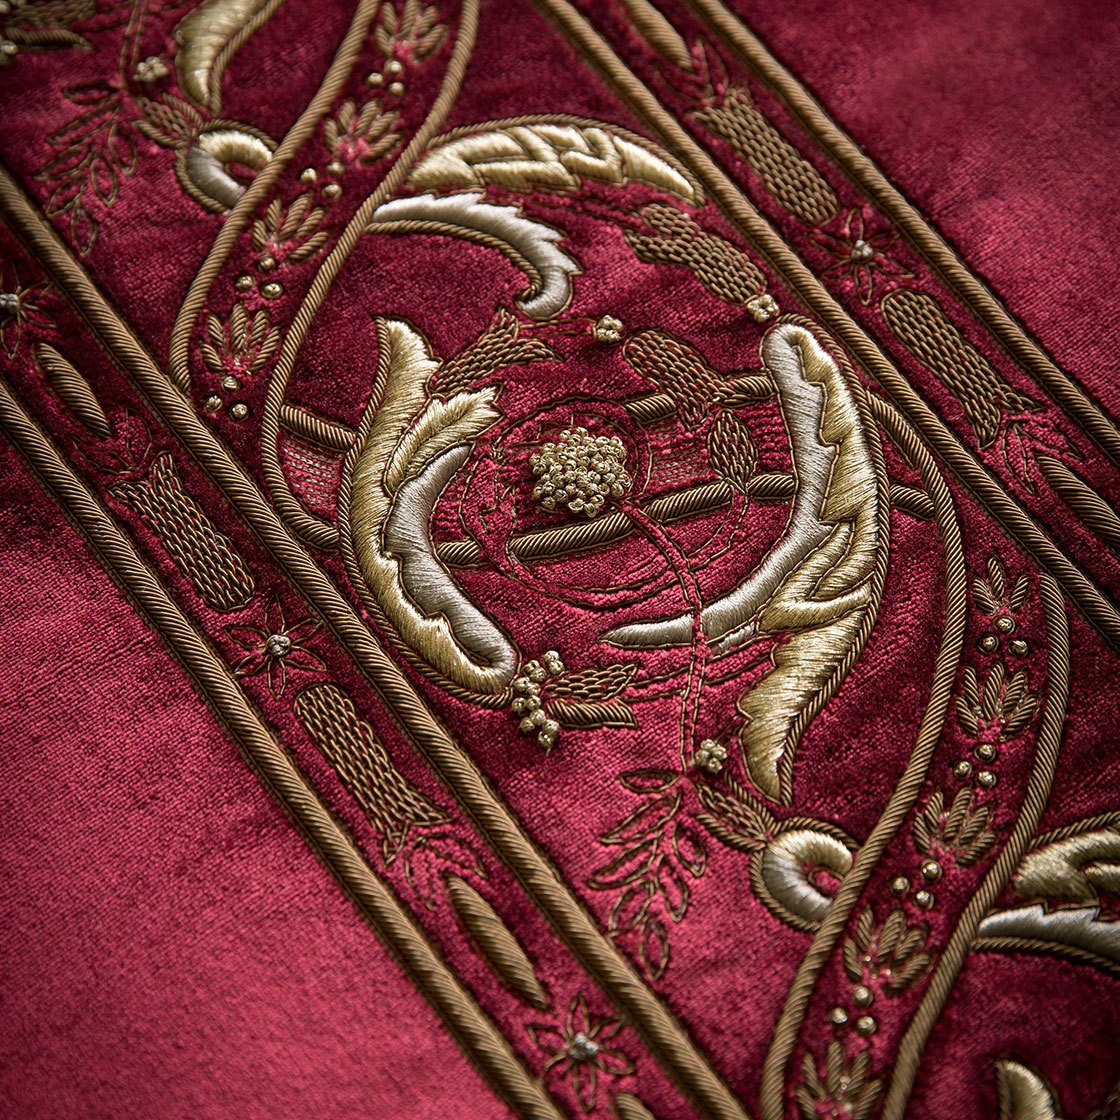 Racine embroidery in Capri silk velvet - Loganberry - Beaumont & Fletcher